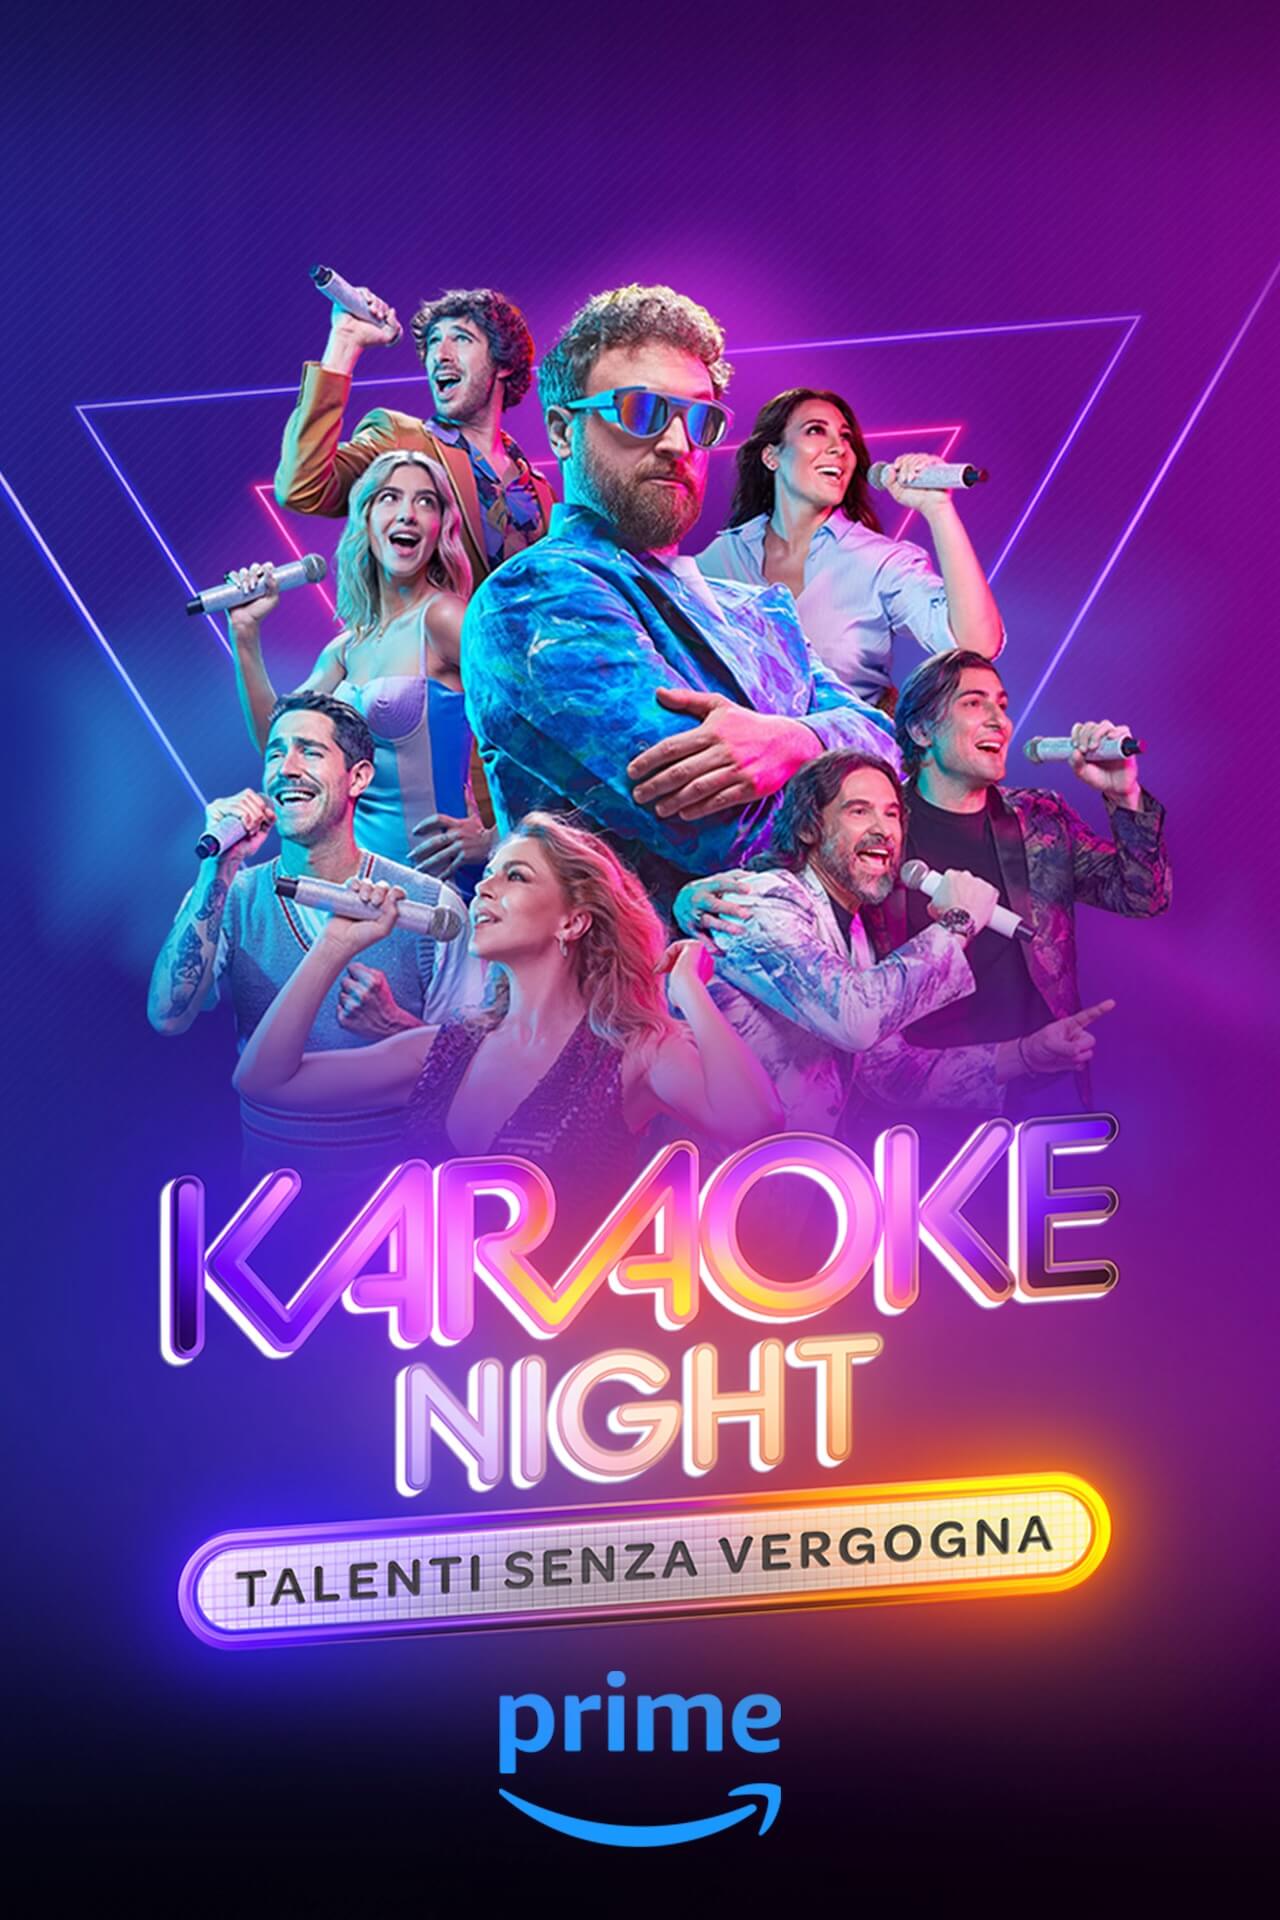 Karaoke Night - Talenti Senza Vergogna, arriva il nuovo show con Tommaso Zorzi - PrimeVideo KaraokeNight Locandina - Gay.it